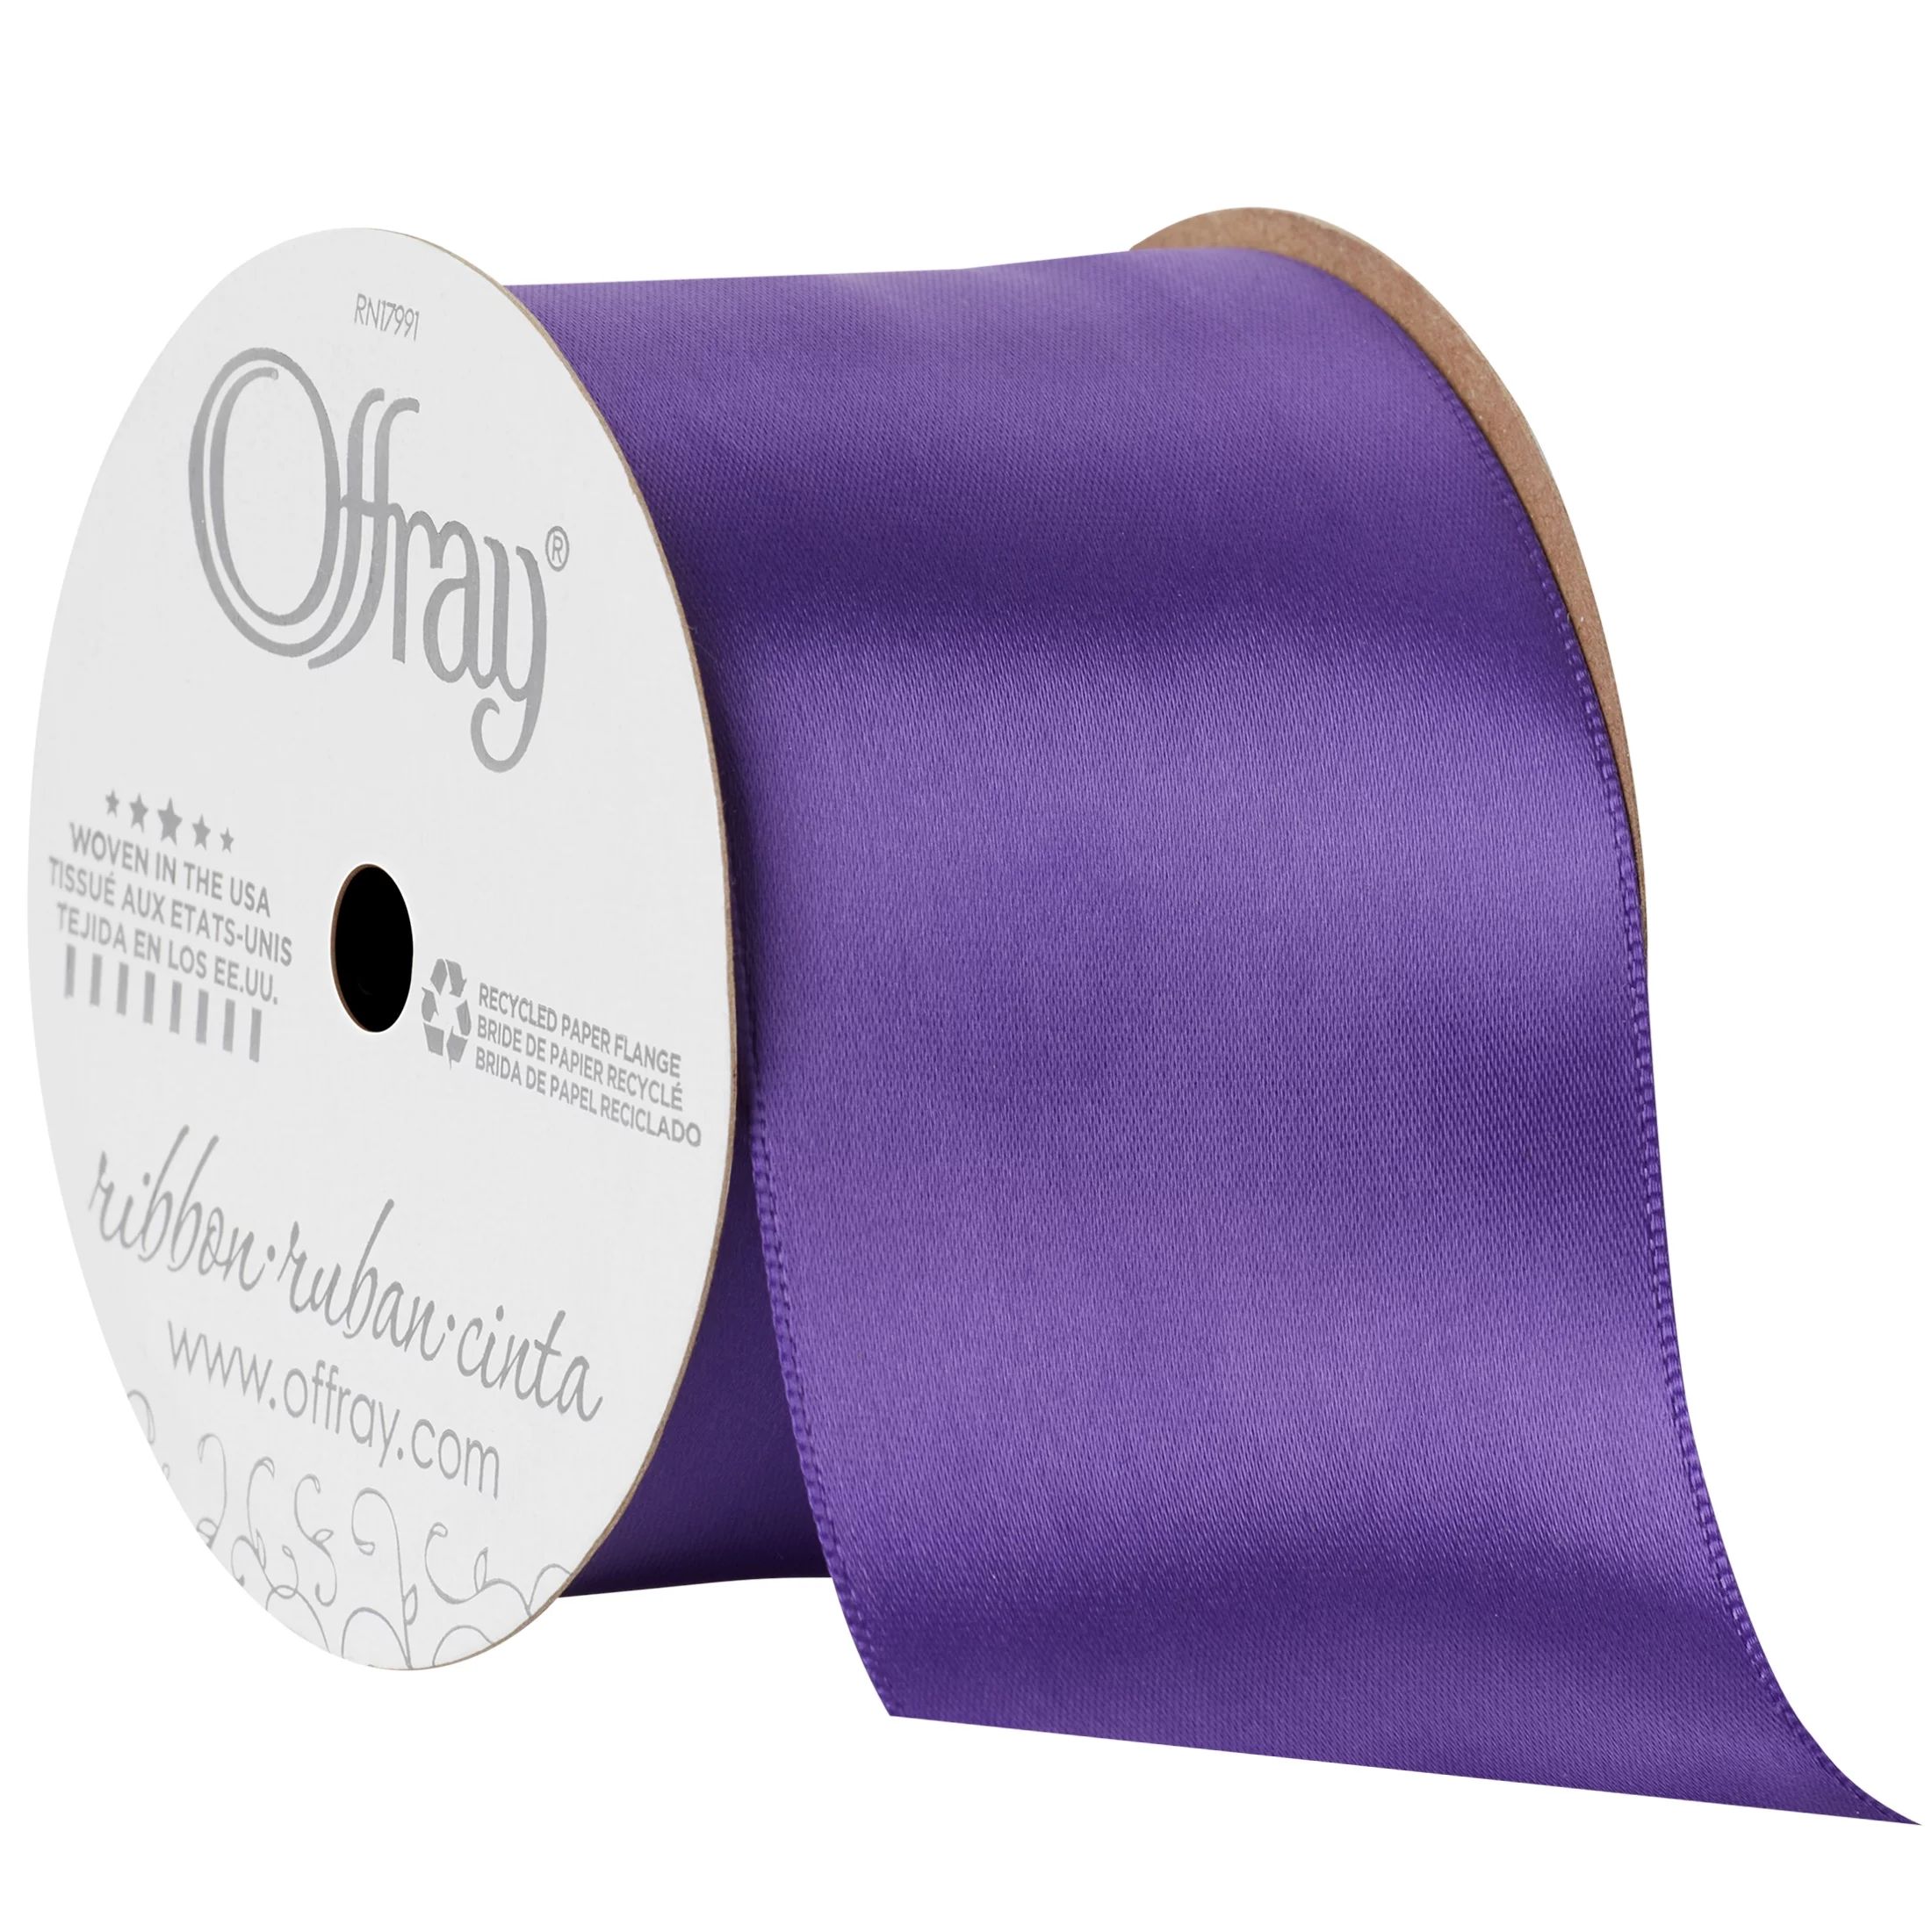 Offray Ribbon, Regal Purple 2 1/4 inch Single Face Satin Polyester Ribbon, 9 feet | Walmart (US)